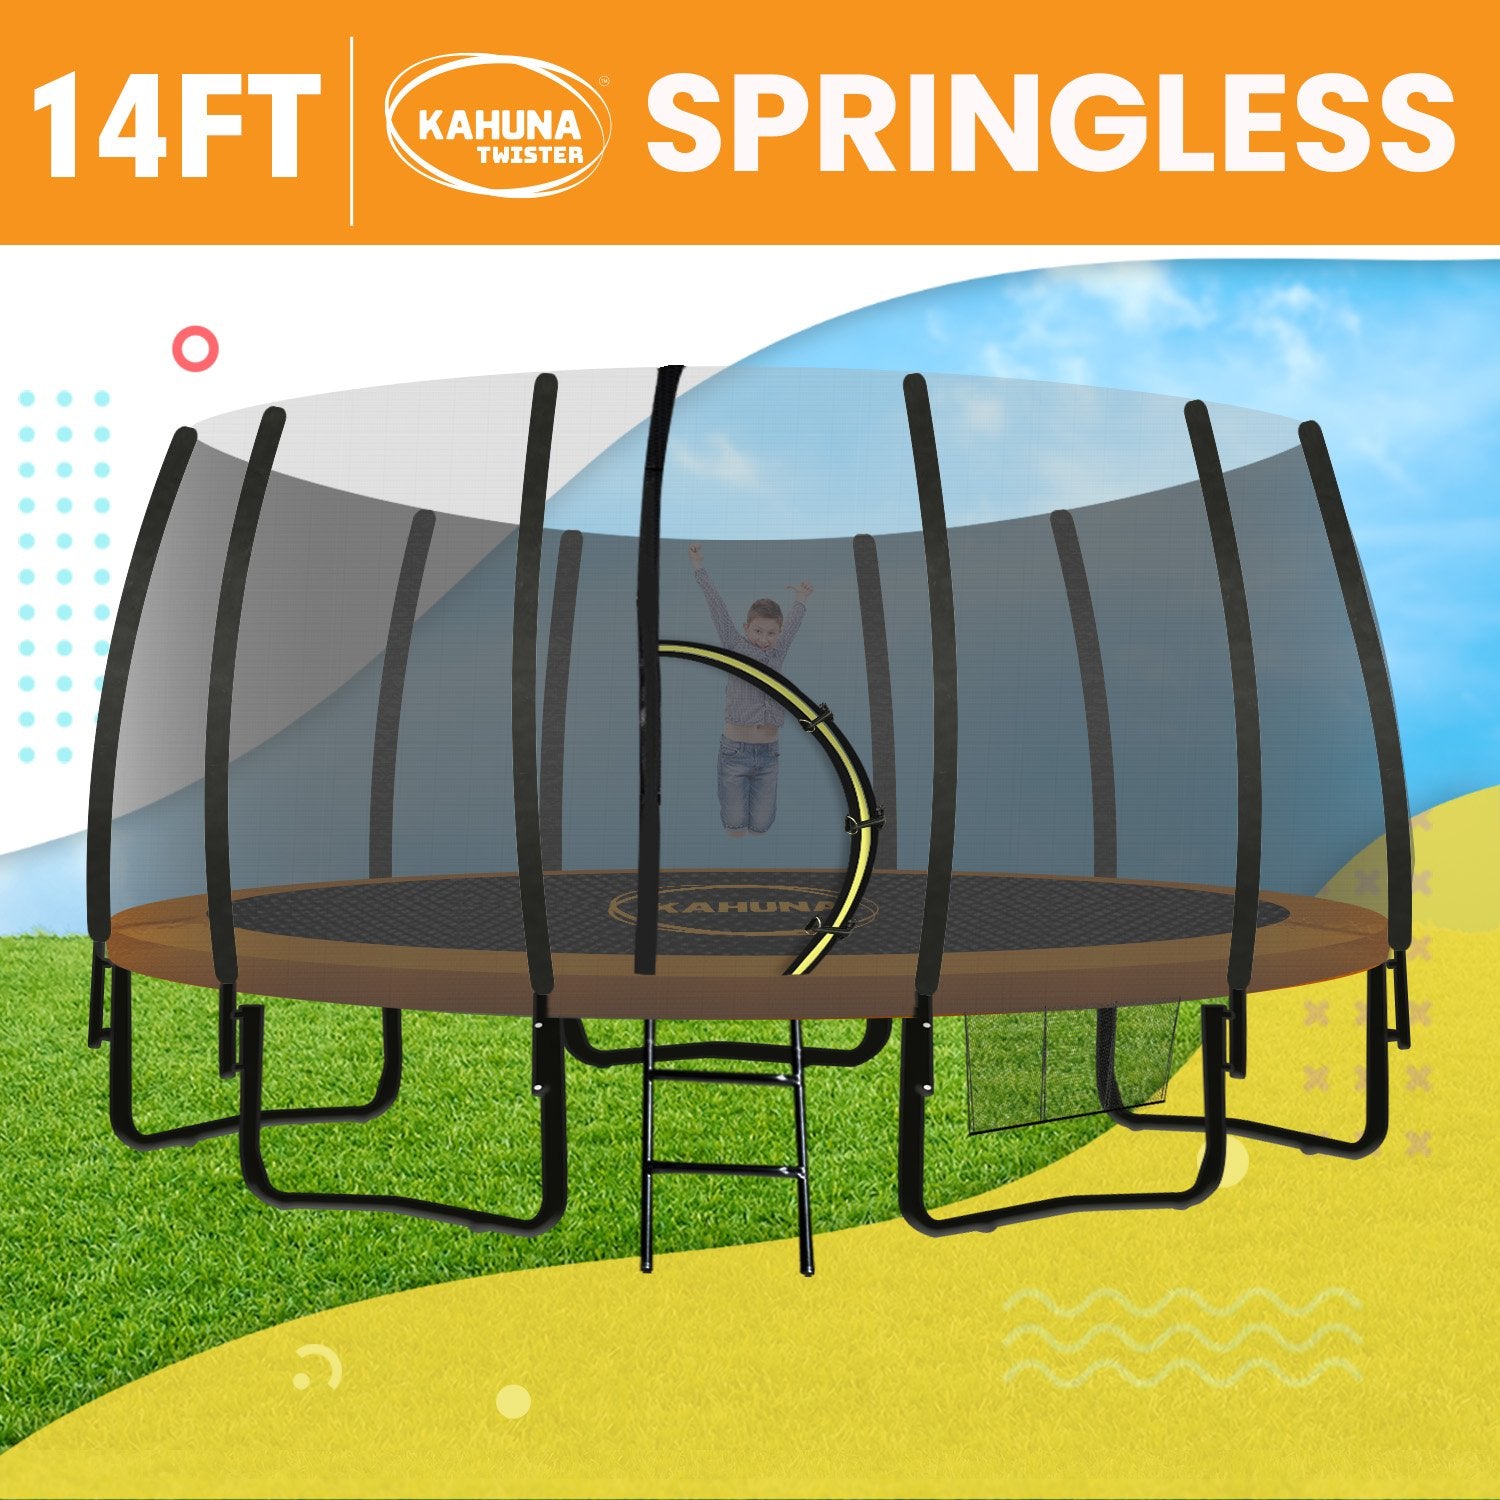 Kahuna Twister 14ft Springless Trampoline Outdoor Kids Safety Net Pad Mat